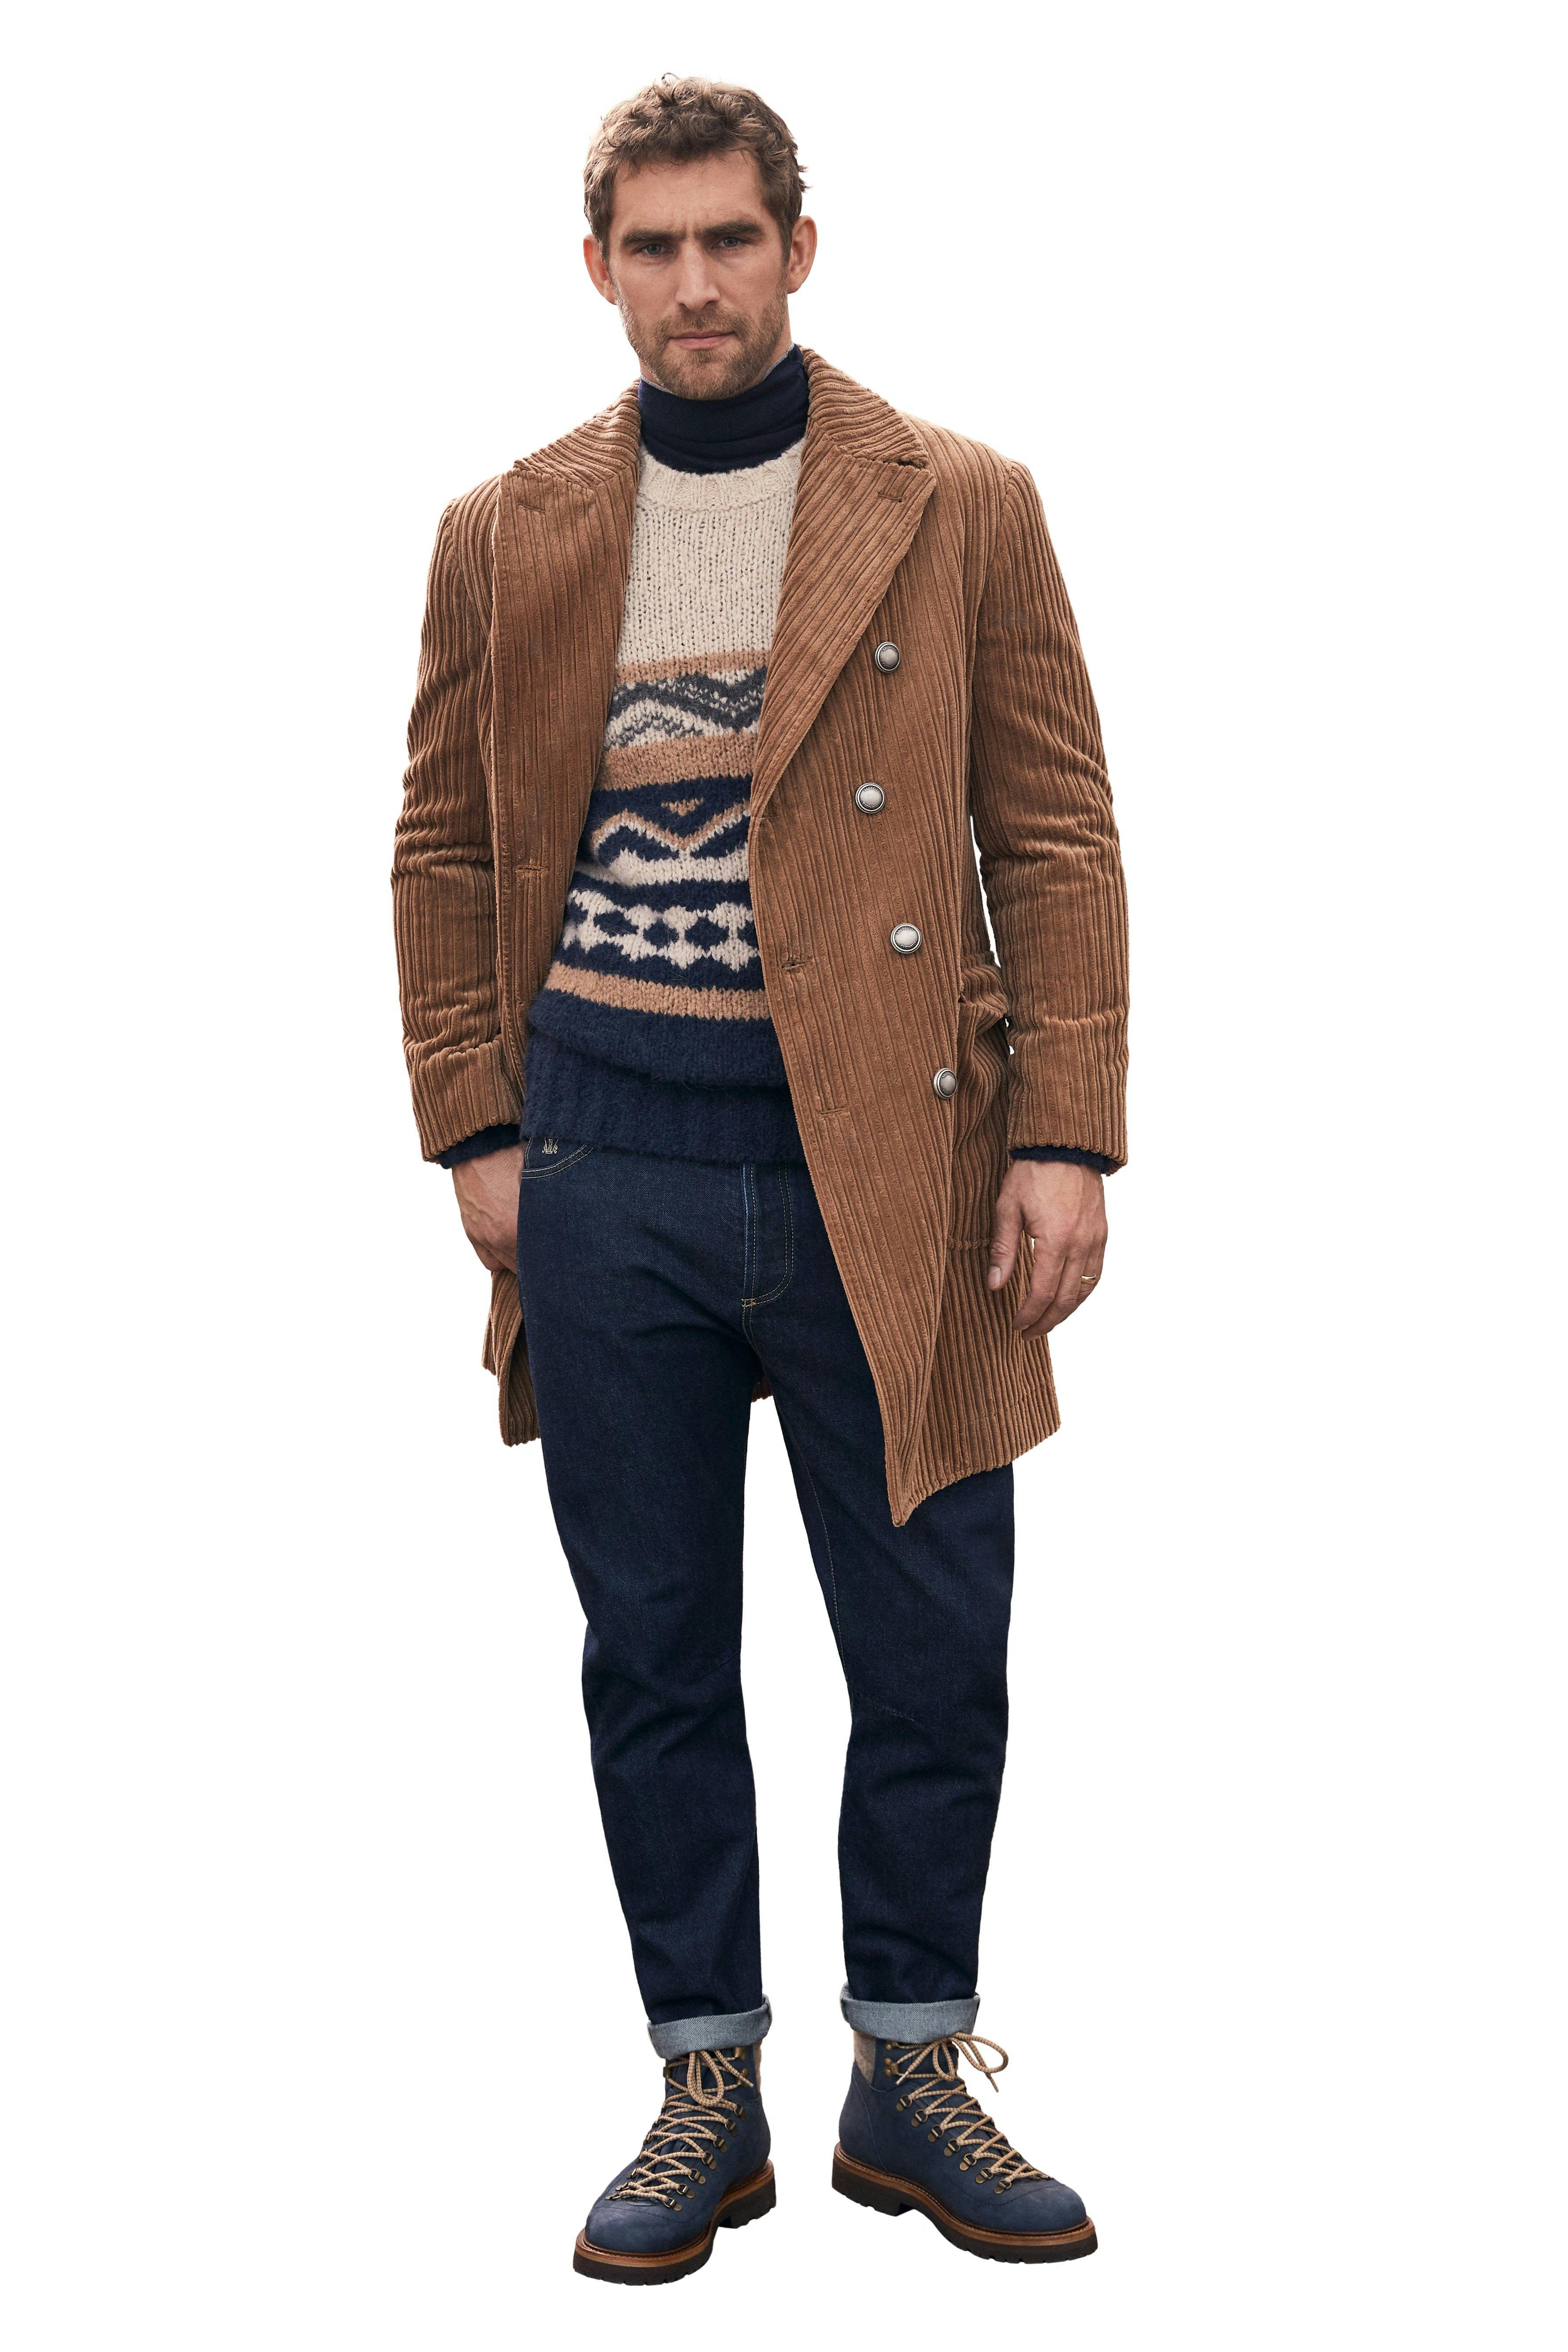 apparel clothing overcoat coat pants person human